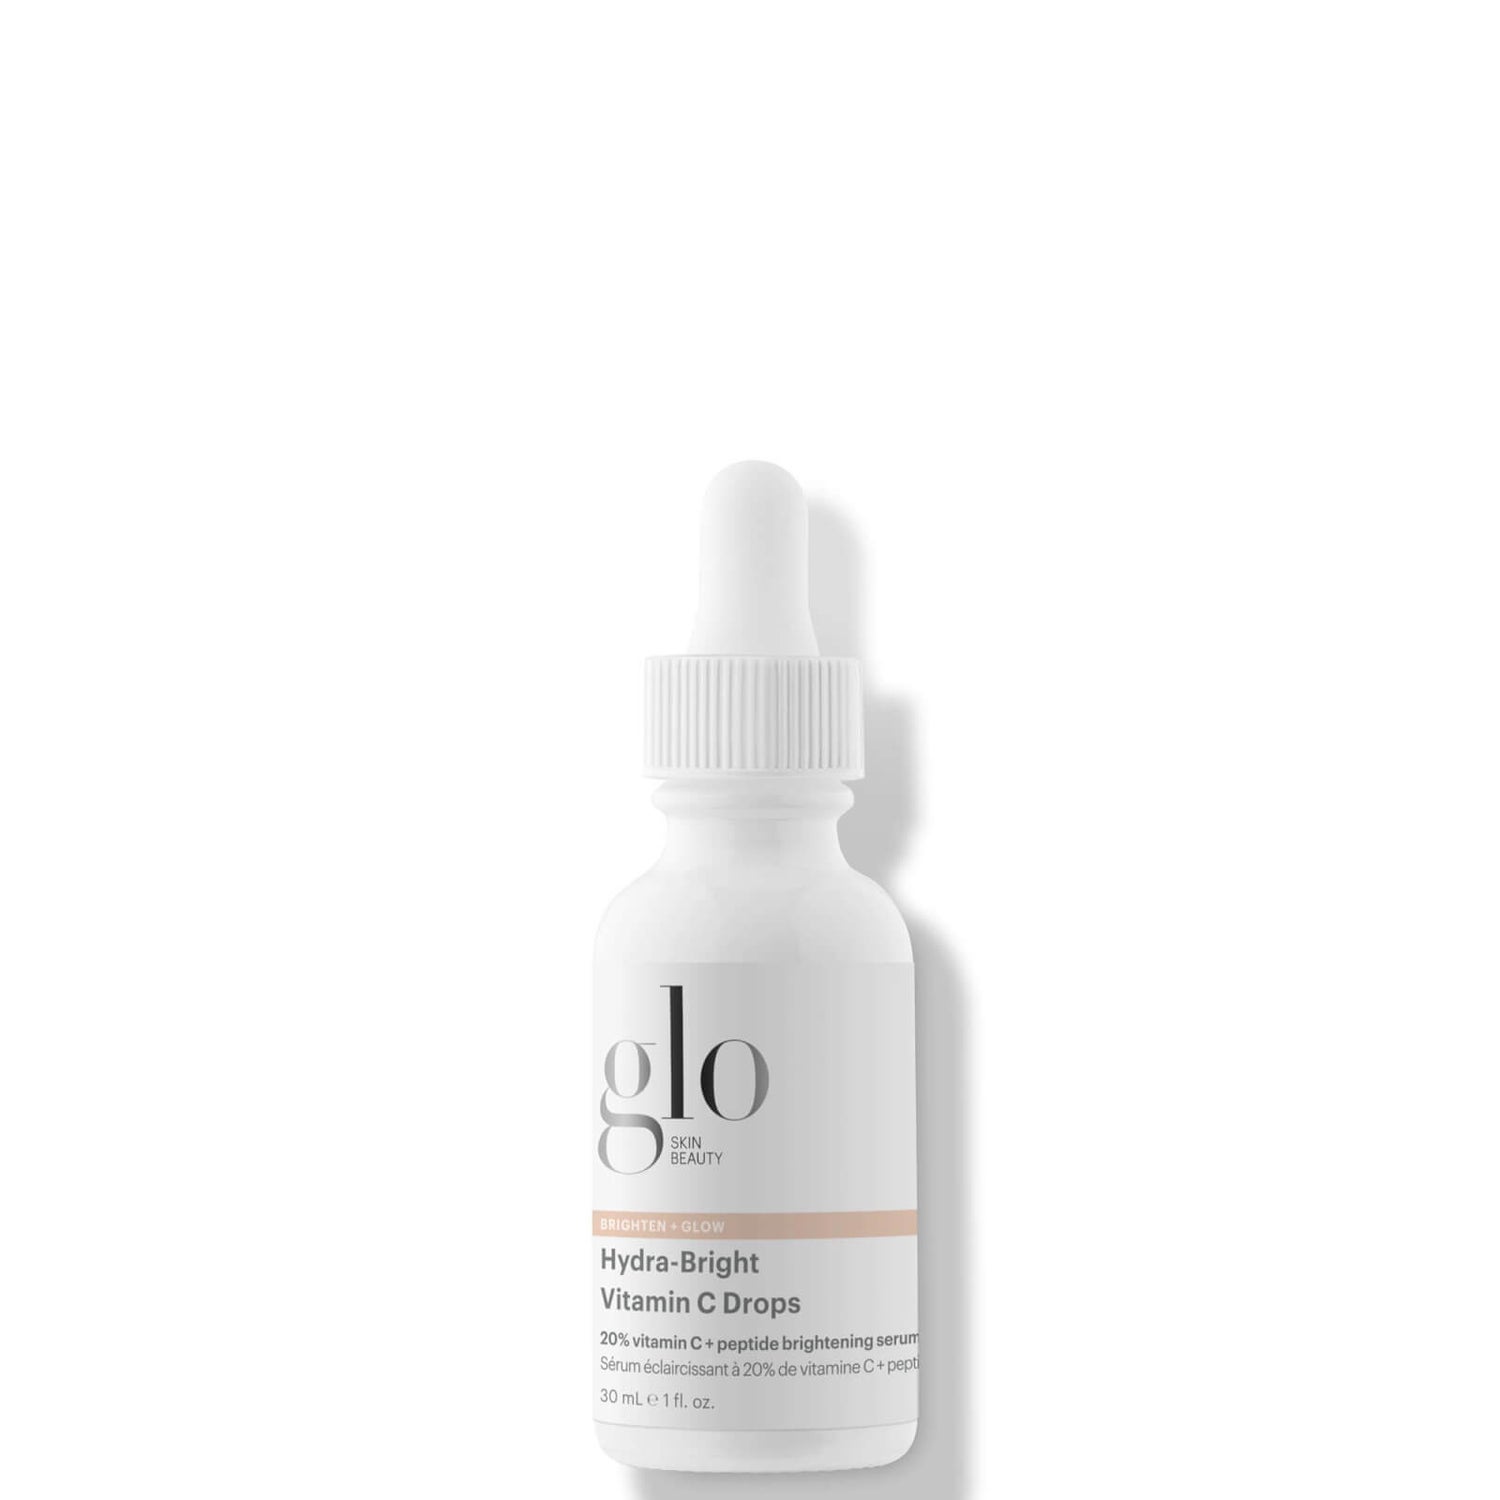 Glo Skin Beauty Hydra-Bright Vitamin C Drops 1 oz